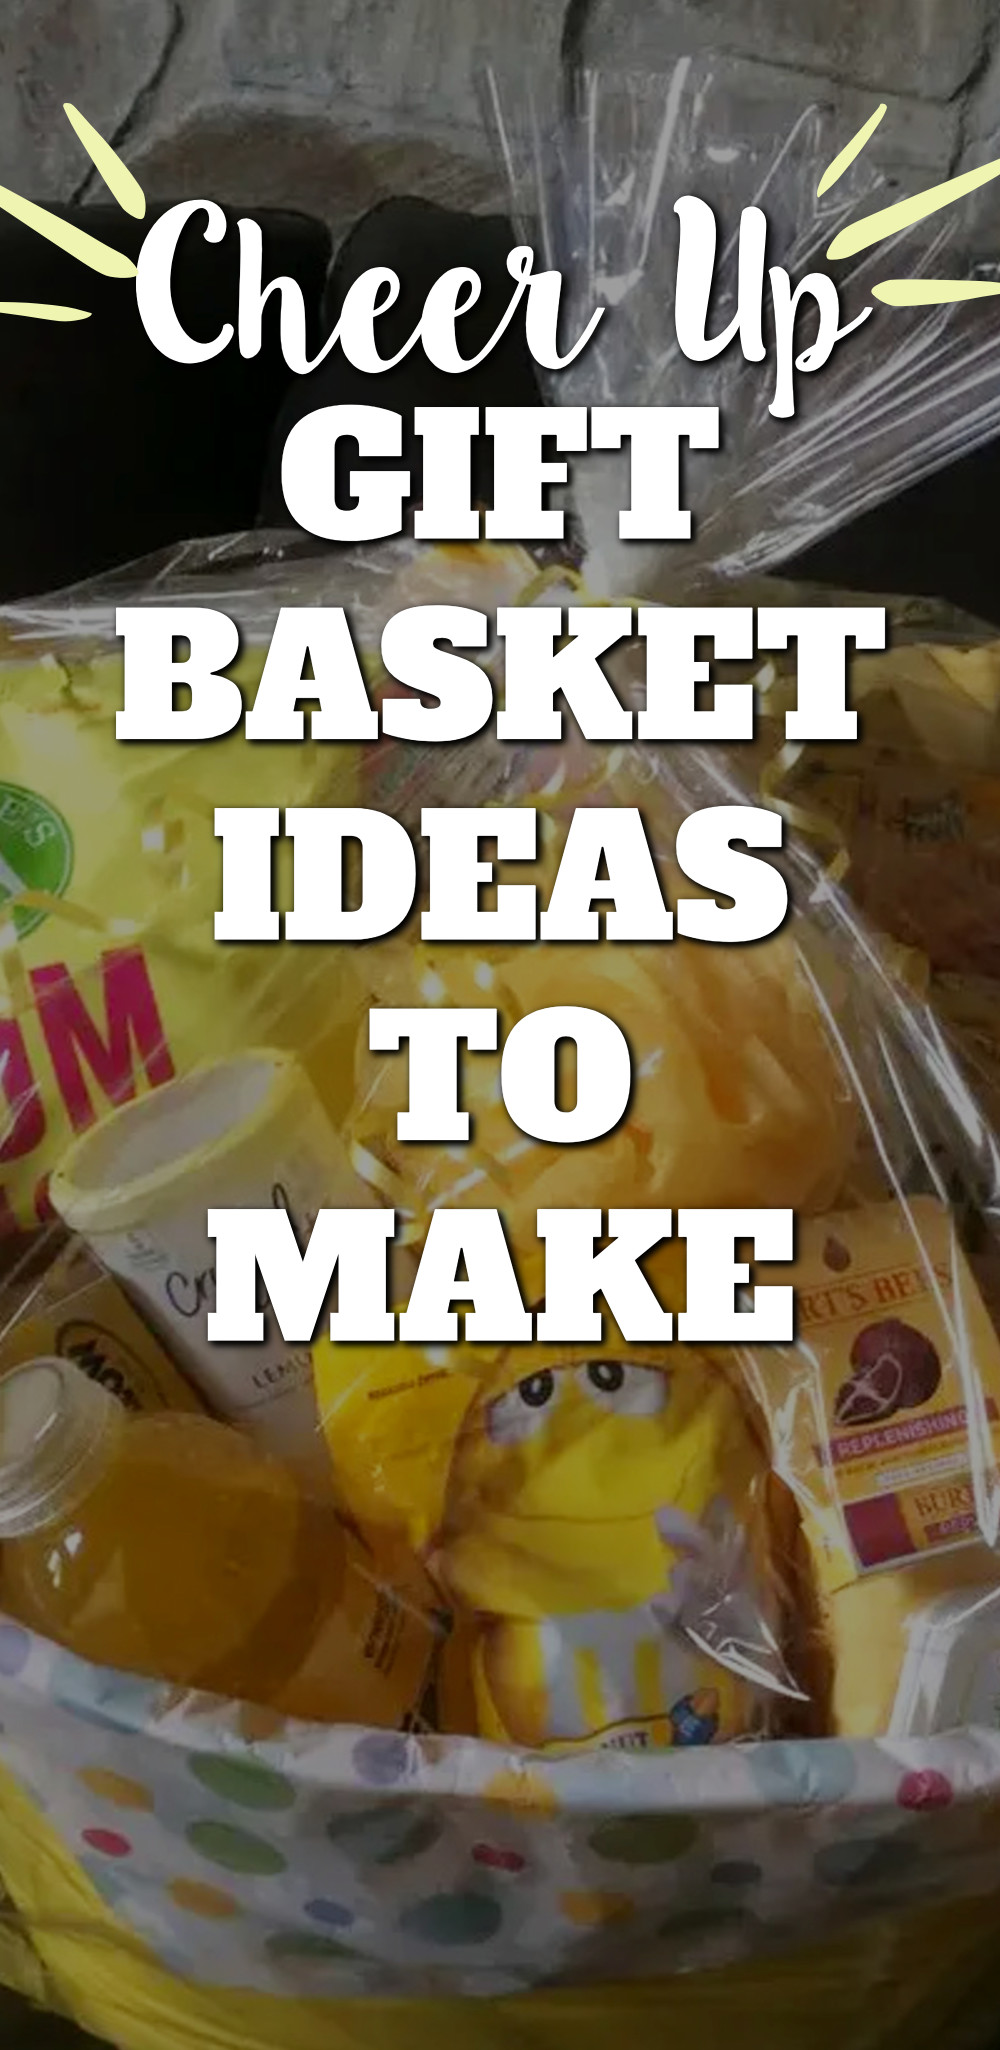 Cheer Up Gift Baskets To Make